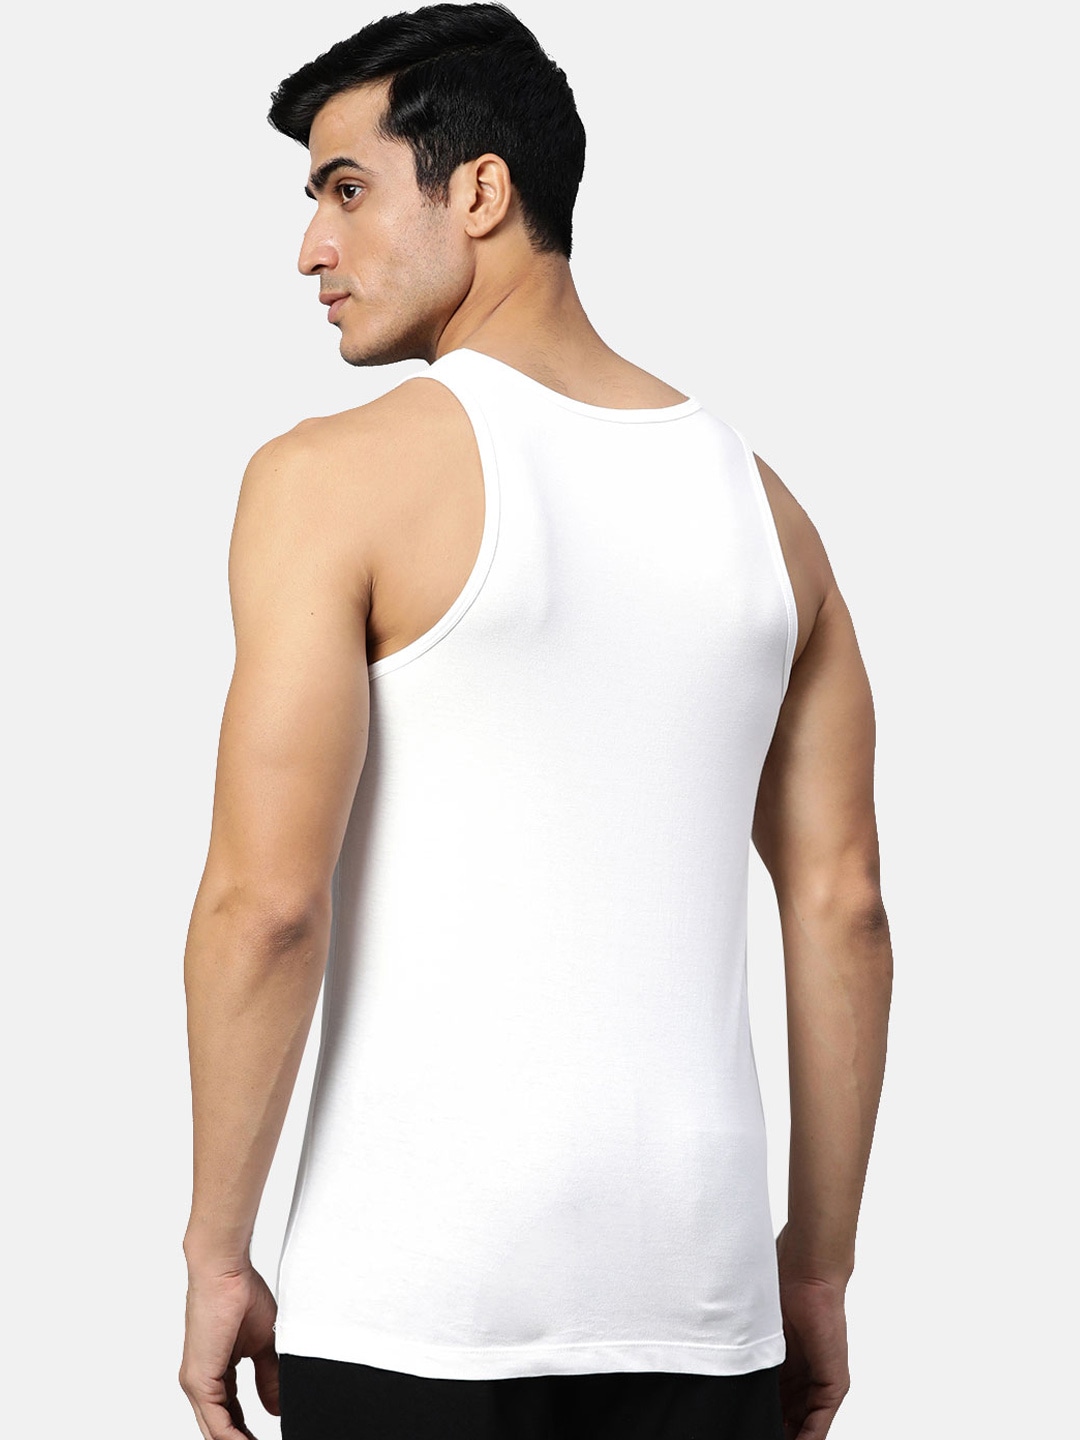 Clothing Innerwear Vests | Almo Wear Men Pack Of 3 Solid Slim-Fit Cotton Innerwear Vests - TH76565